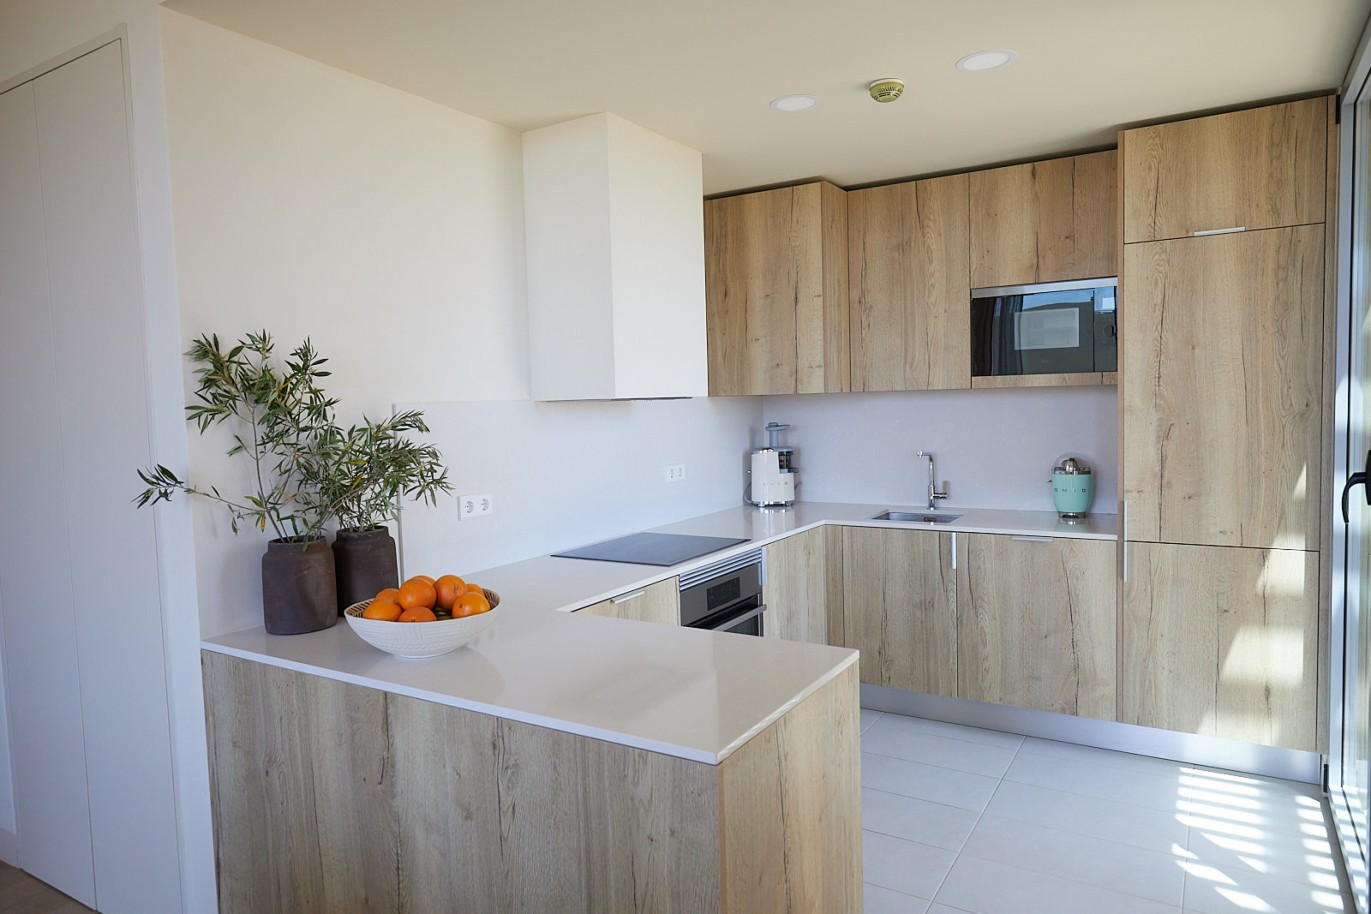 2 bedroom apartment in resort, for sale in Porches, Algarve_229219